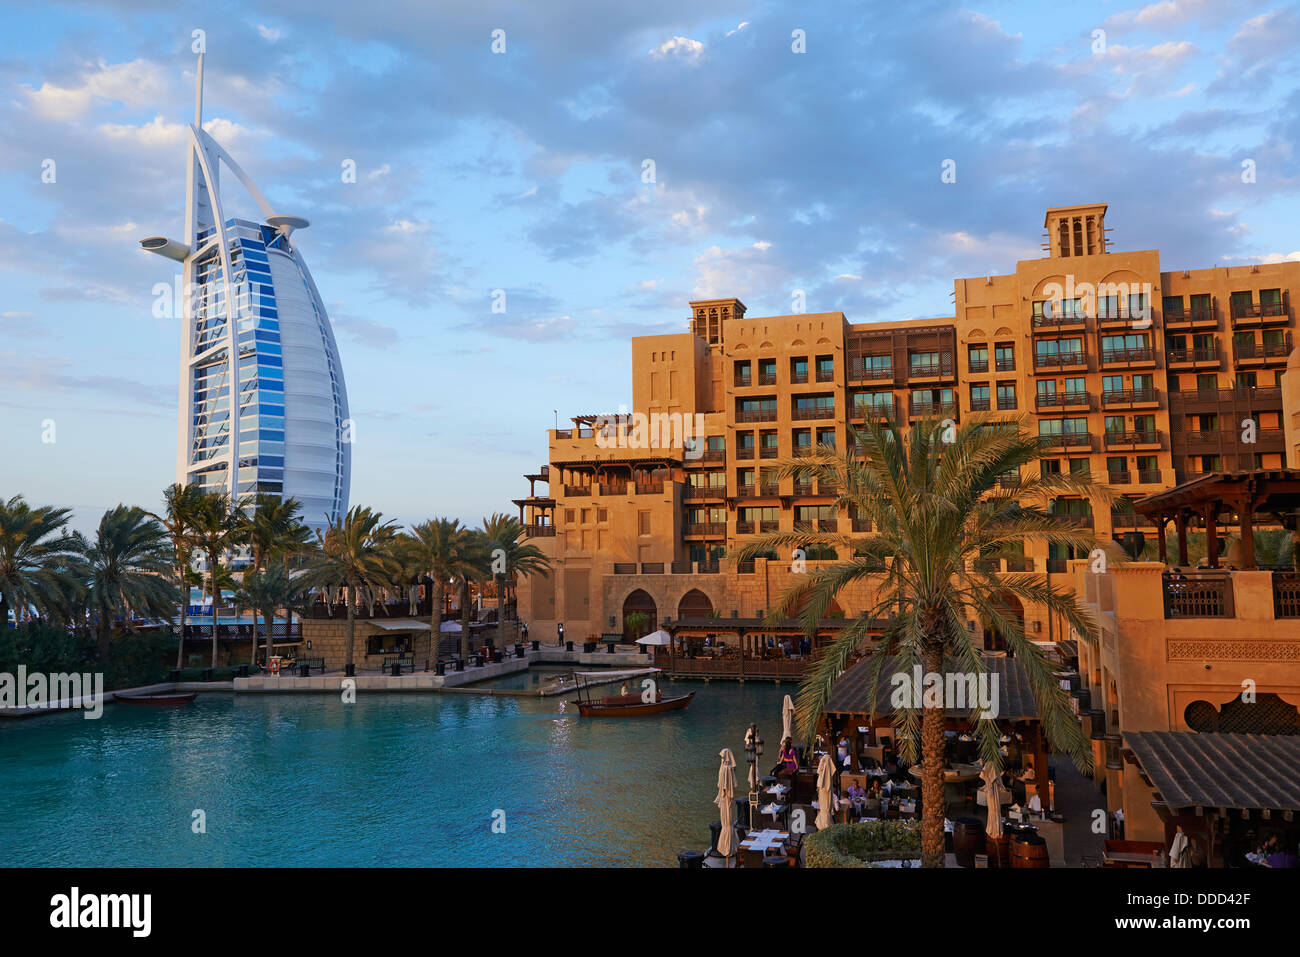 Vereinigte Arabische Emirate, Dubai, Jumeirah Beach, Hotel Mina A'Salam Madinat Jumeirah mit Ansicht des Burj Al Arab hotel Stockfoto